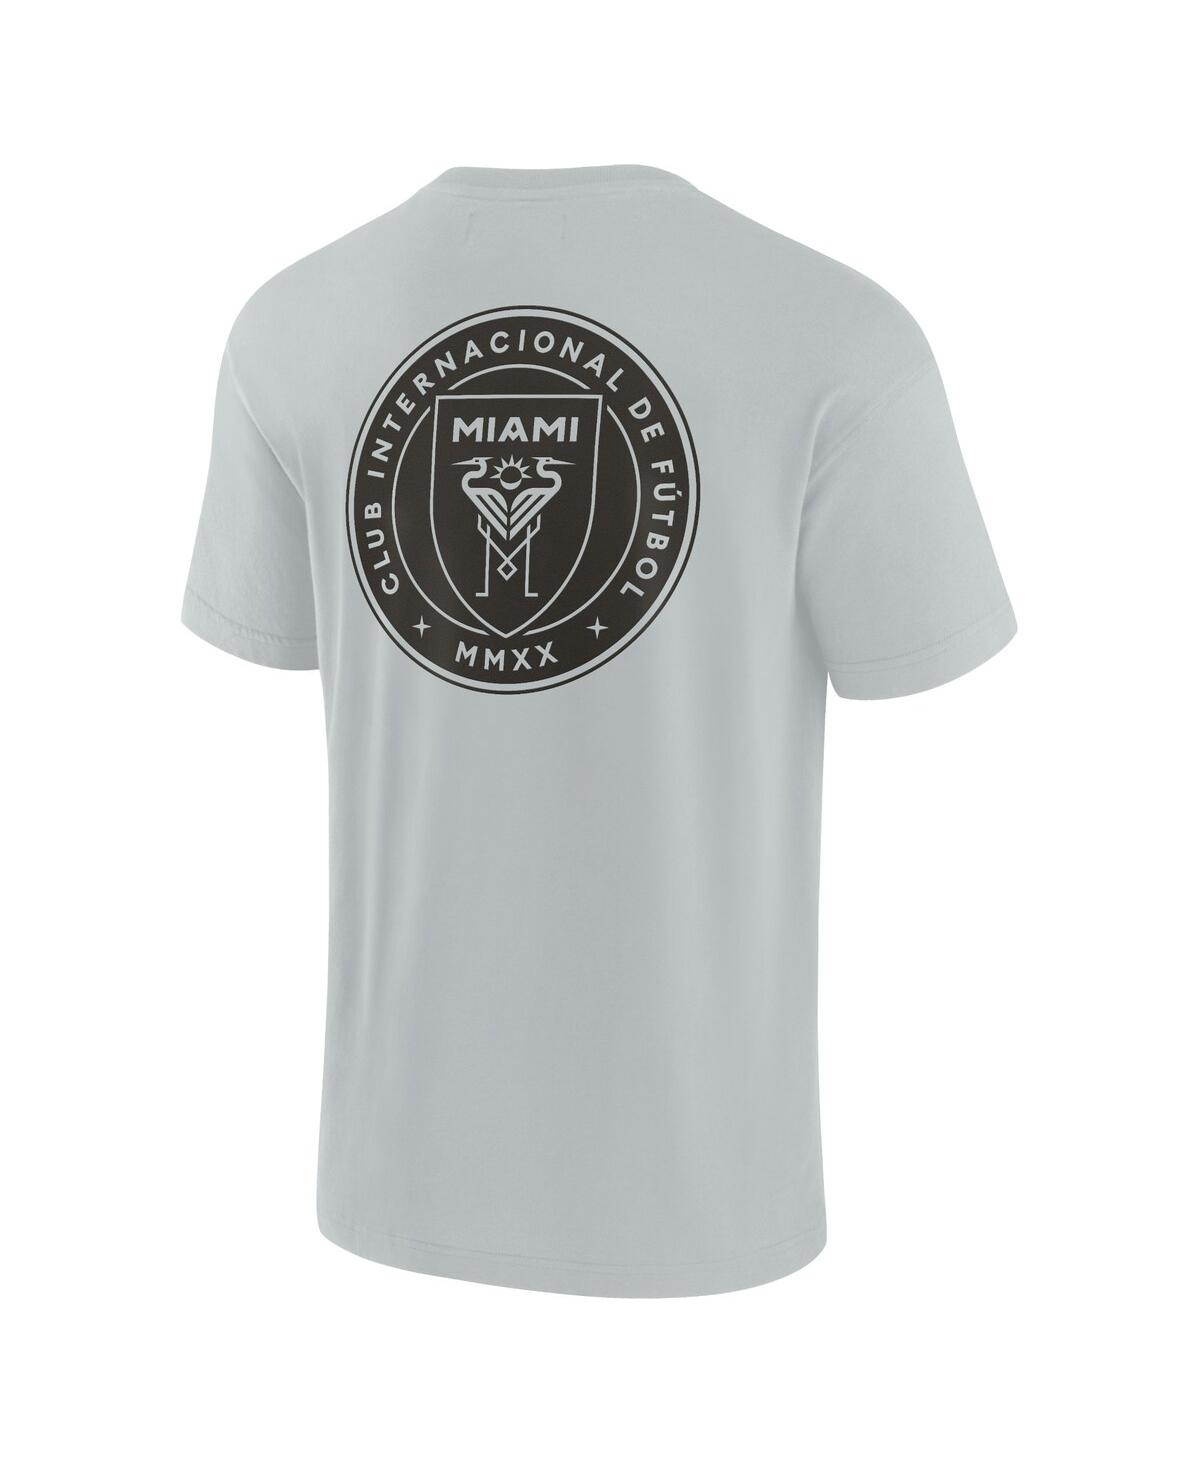 Shop Fanatics Signature Men's  Gray Inter Miami Cf Oversized Logo T-shirt